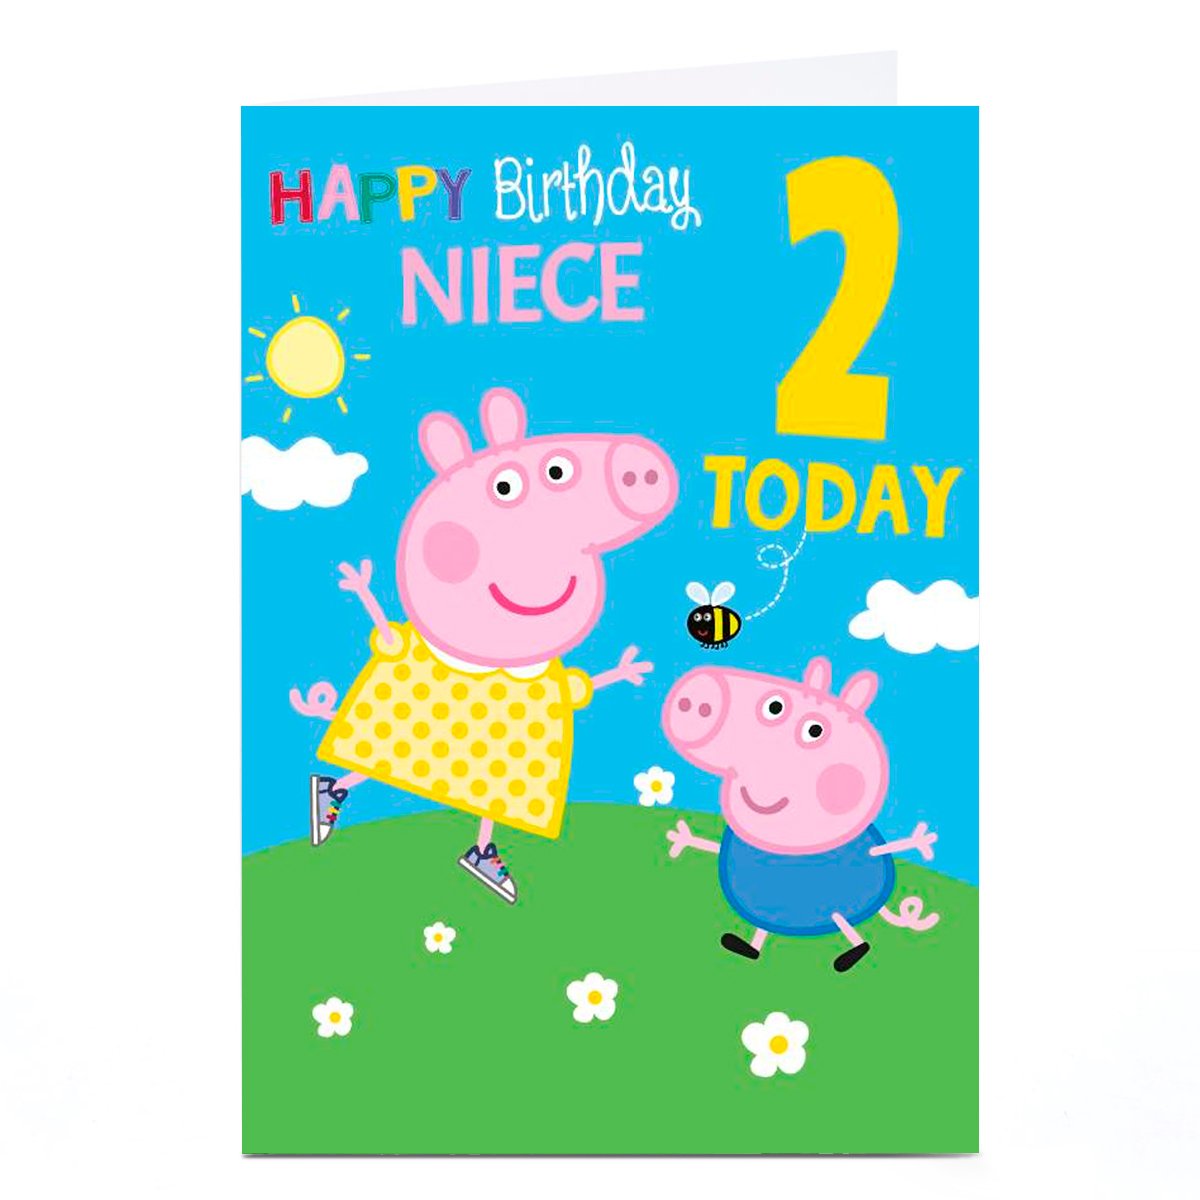 Personalised Birthday Card - Peppa Pig Niece, Age 5